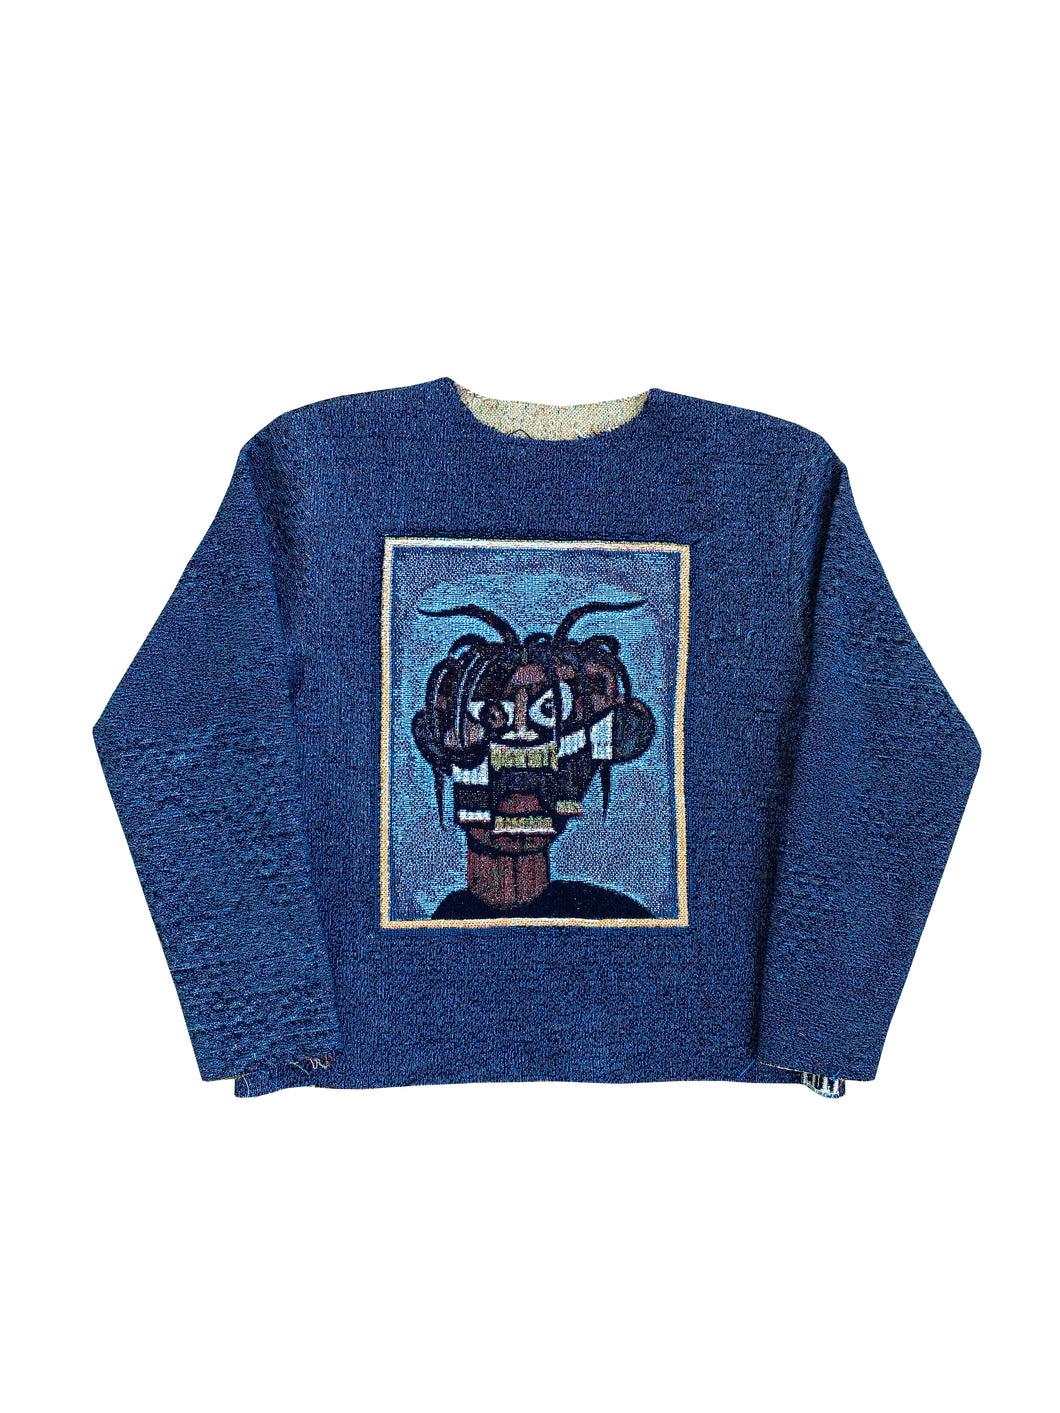 George Condo Travis Scott Tapestry Sweatshirt